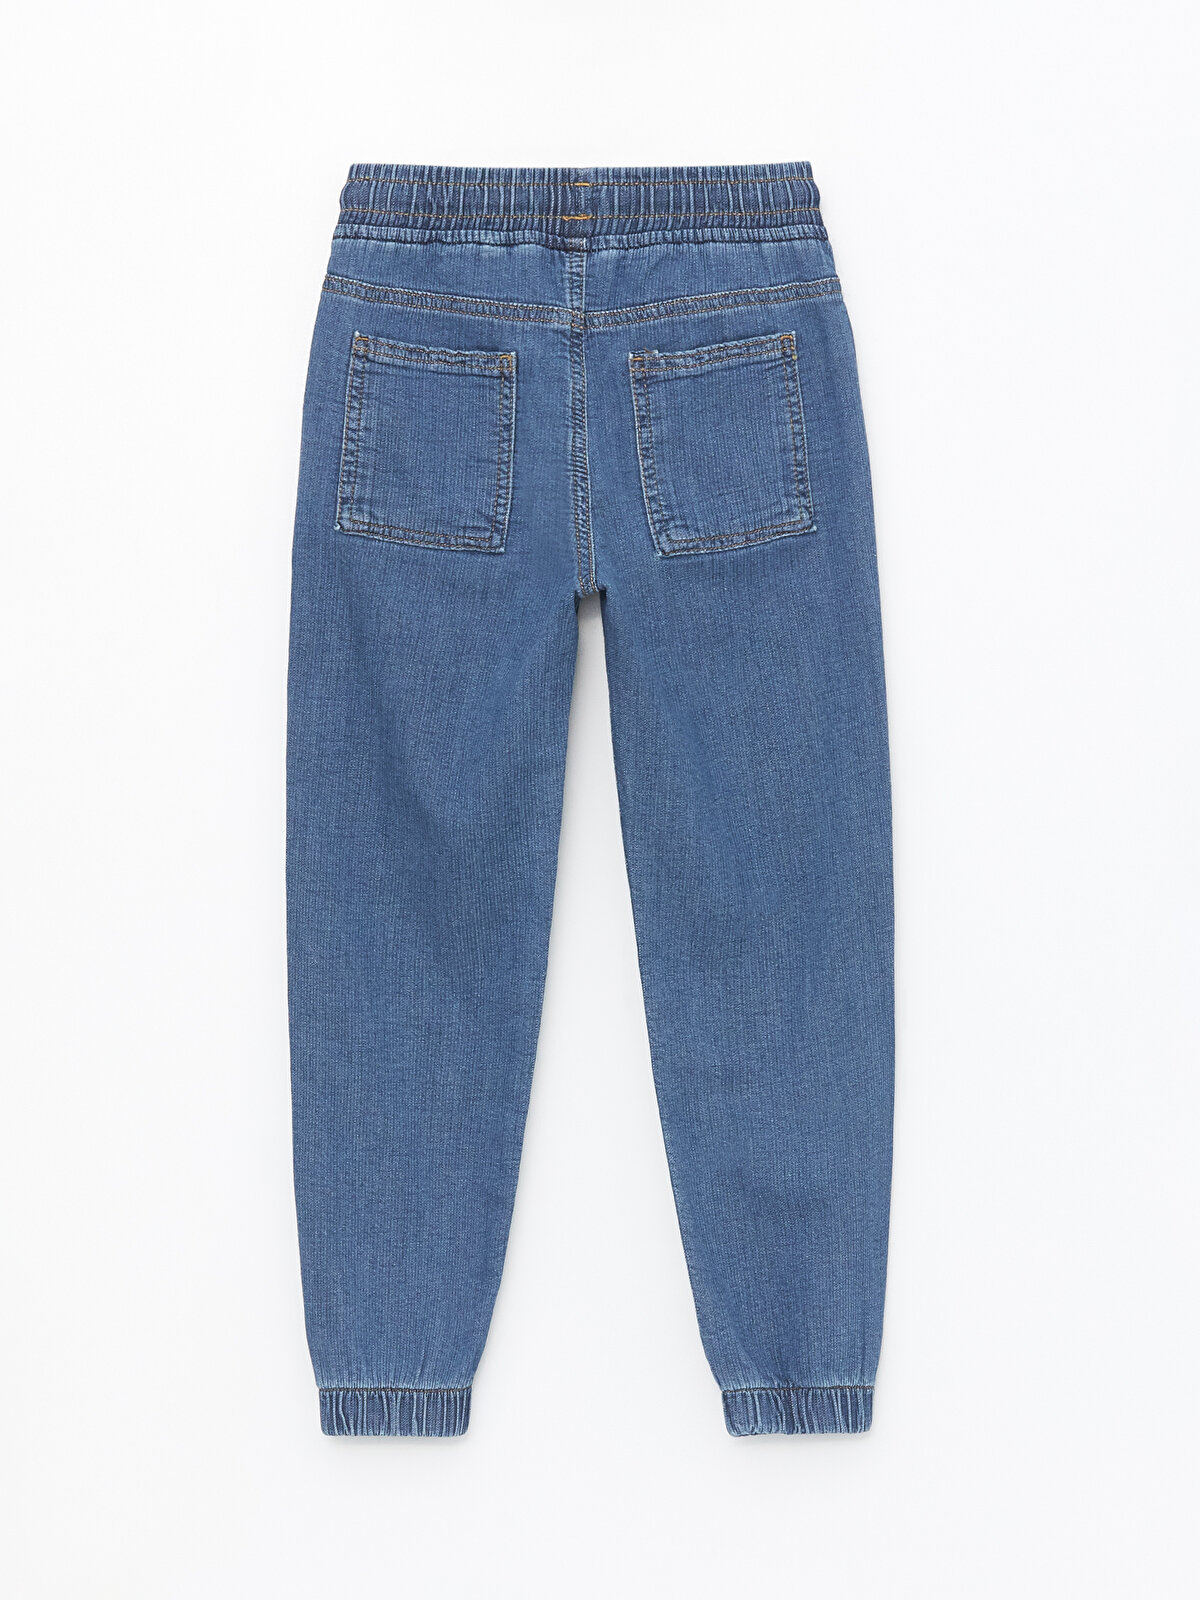 Boys Jogger Jeans With Elastic Waist -S47474Z4-507 - S47474Z4 